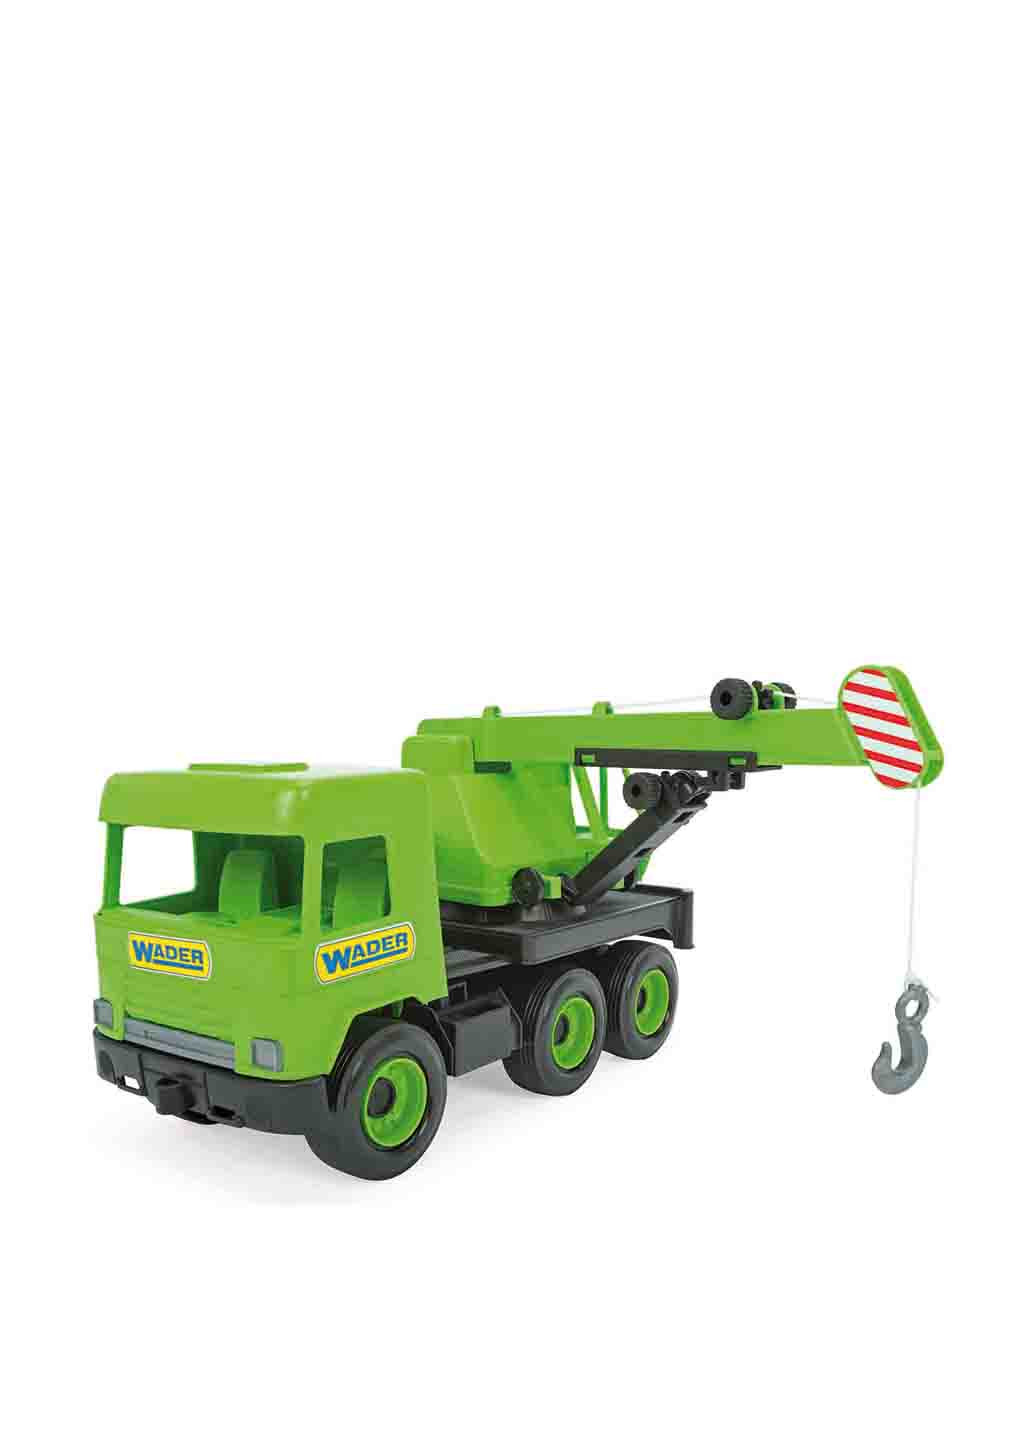 Авто Middle Truck - кран (зелений) у коробці Wader (45861581)